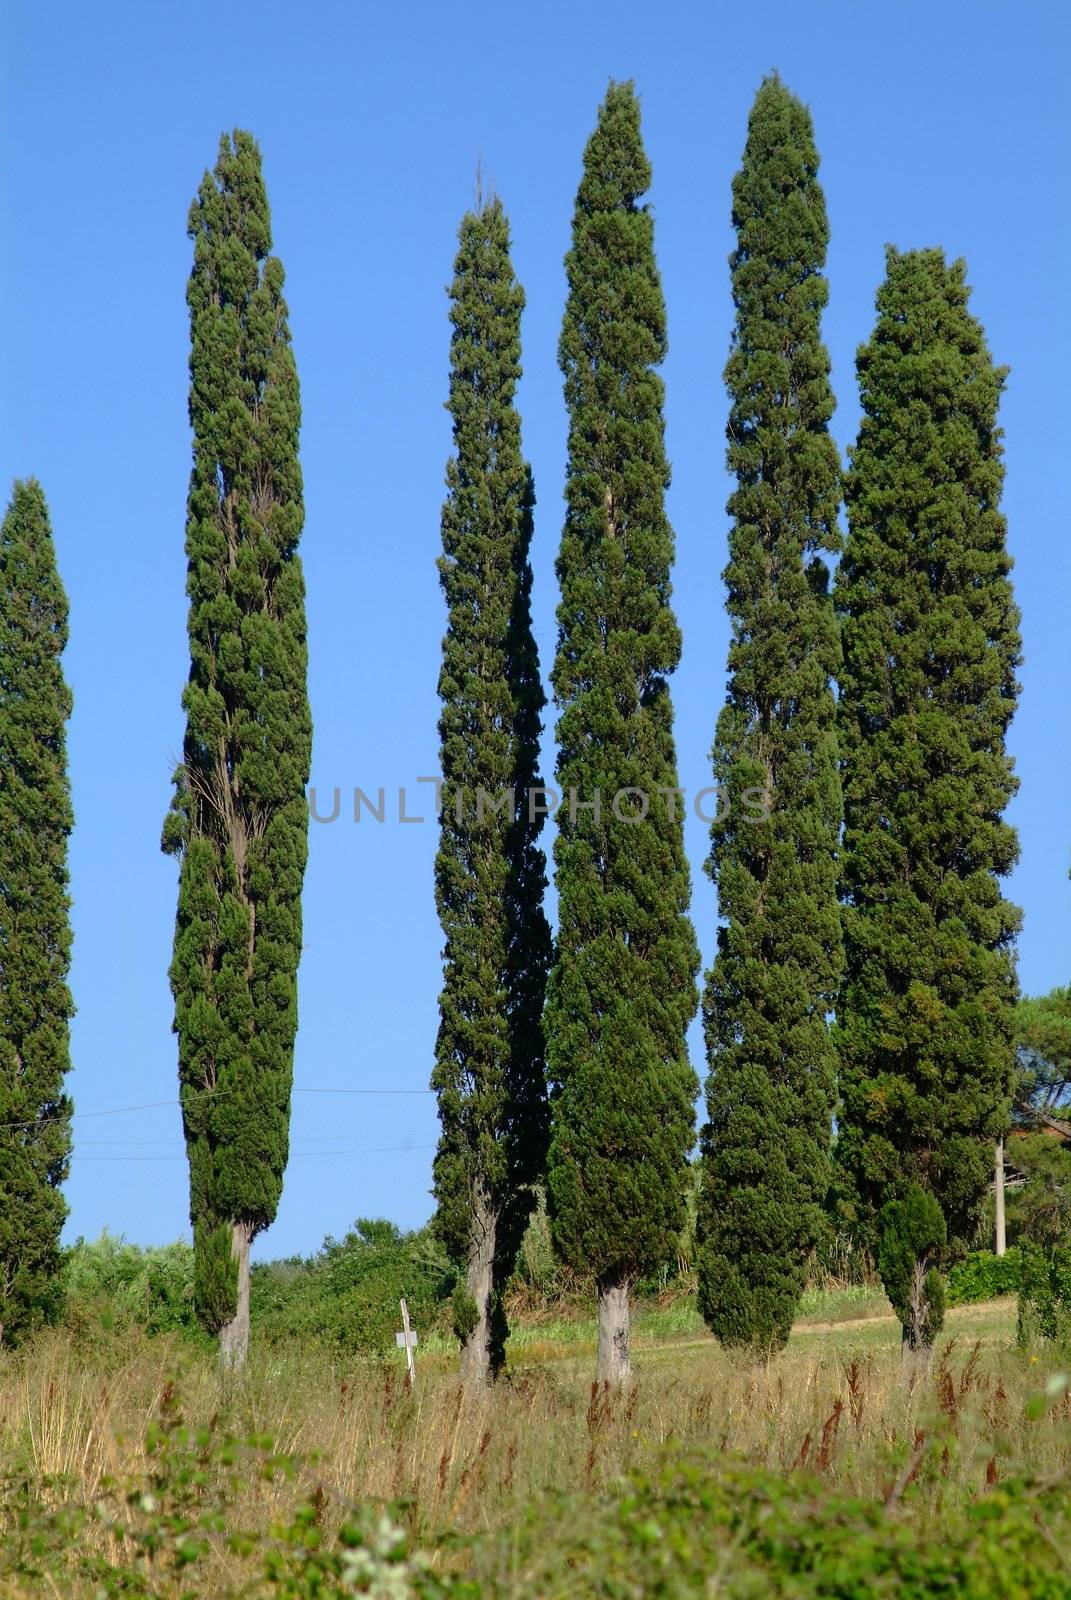 zypresse 6 | 6 cypresses  by fotofritz